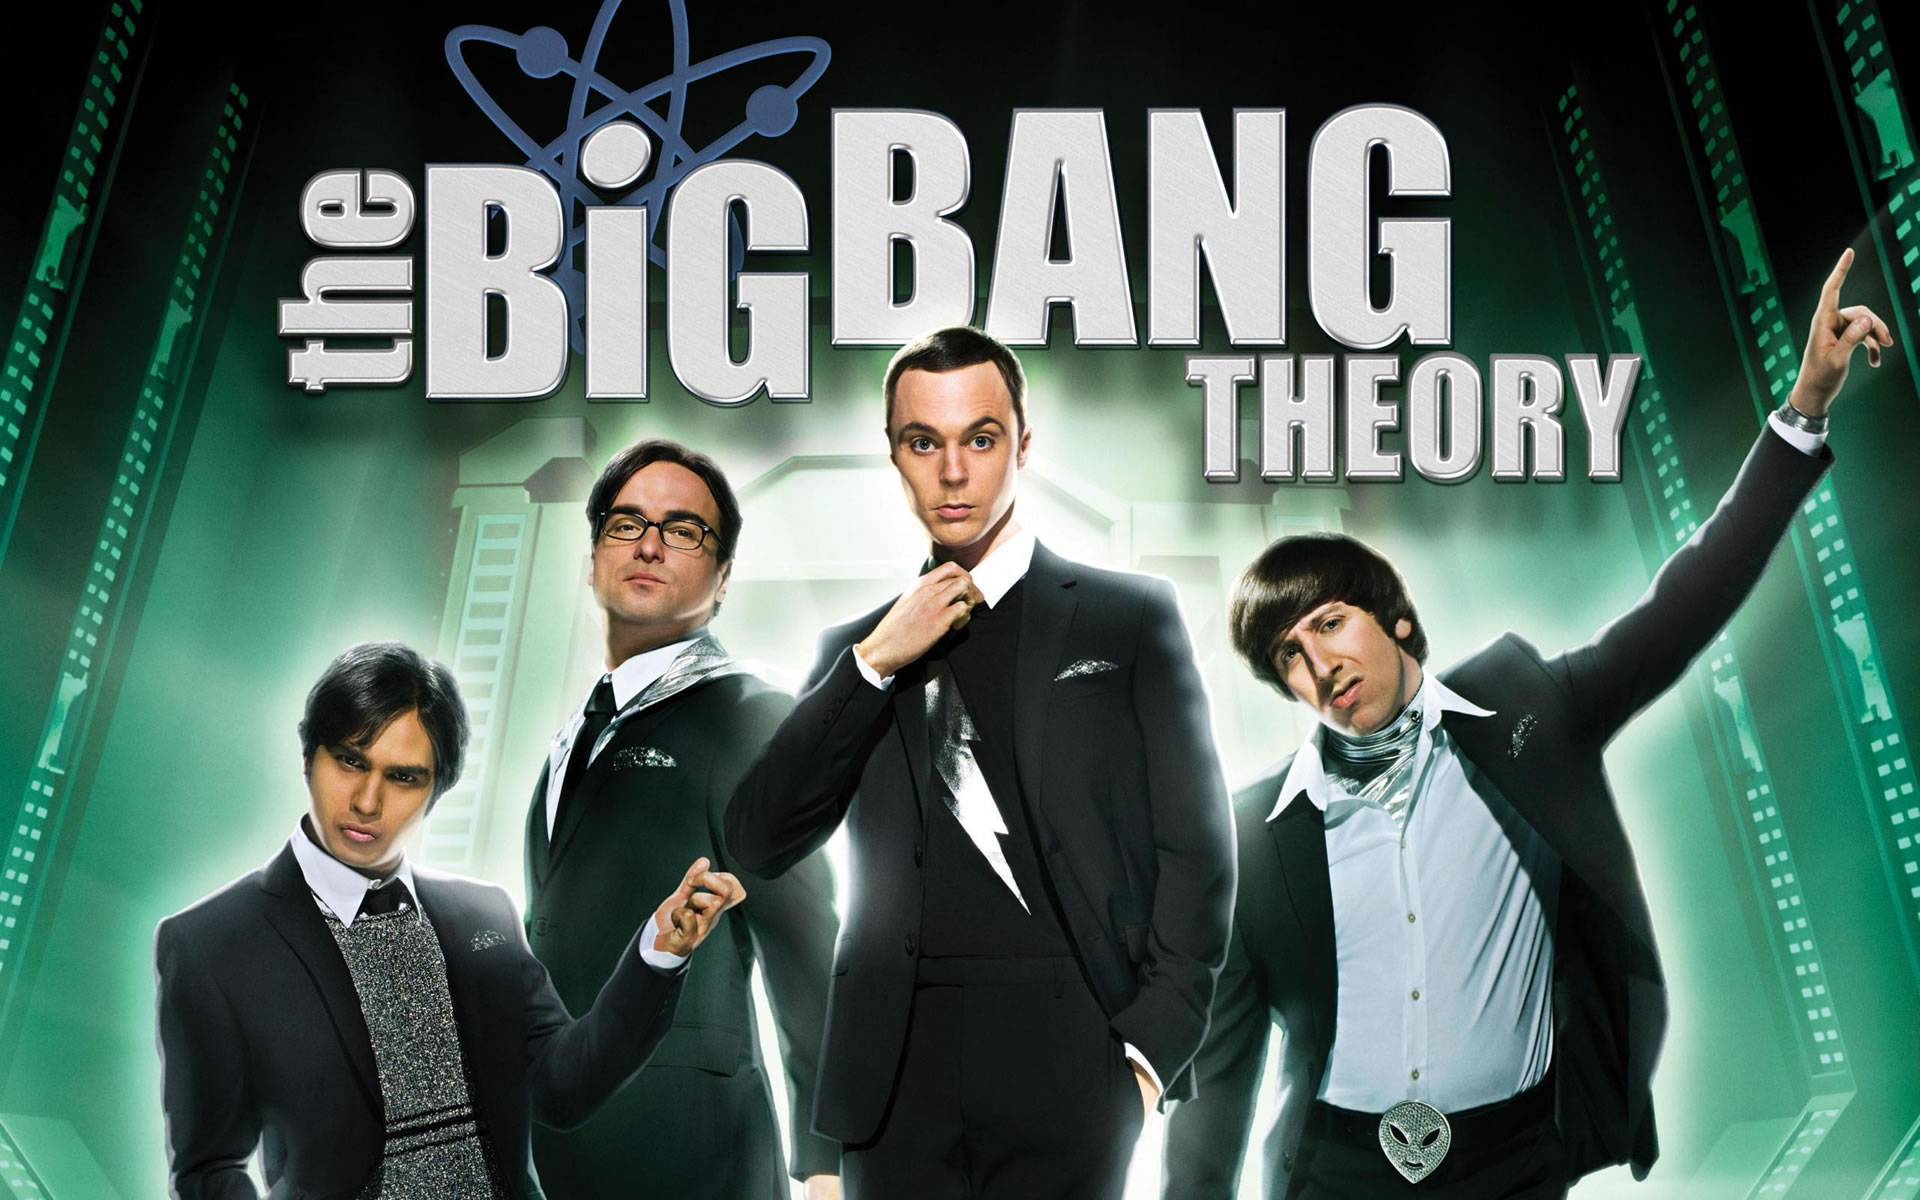 Fondos de Series Gratis. The Big Bang Theory